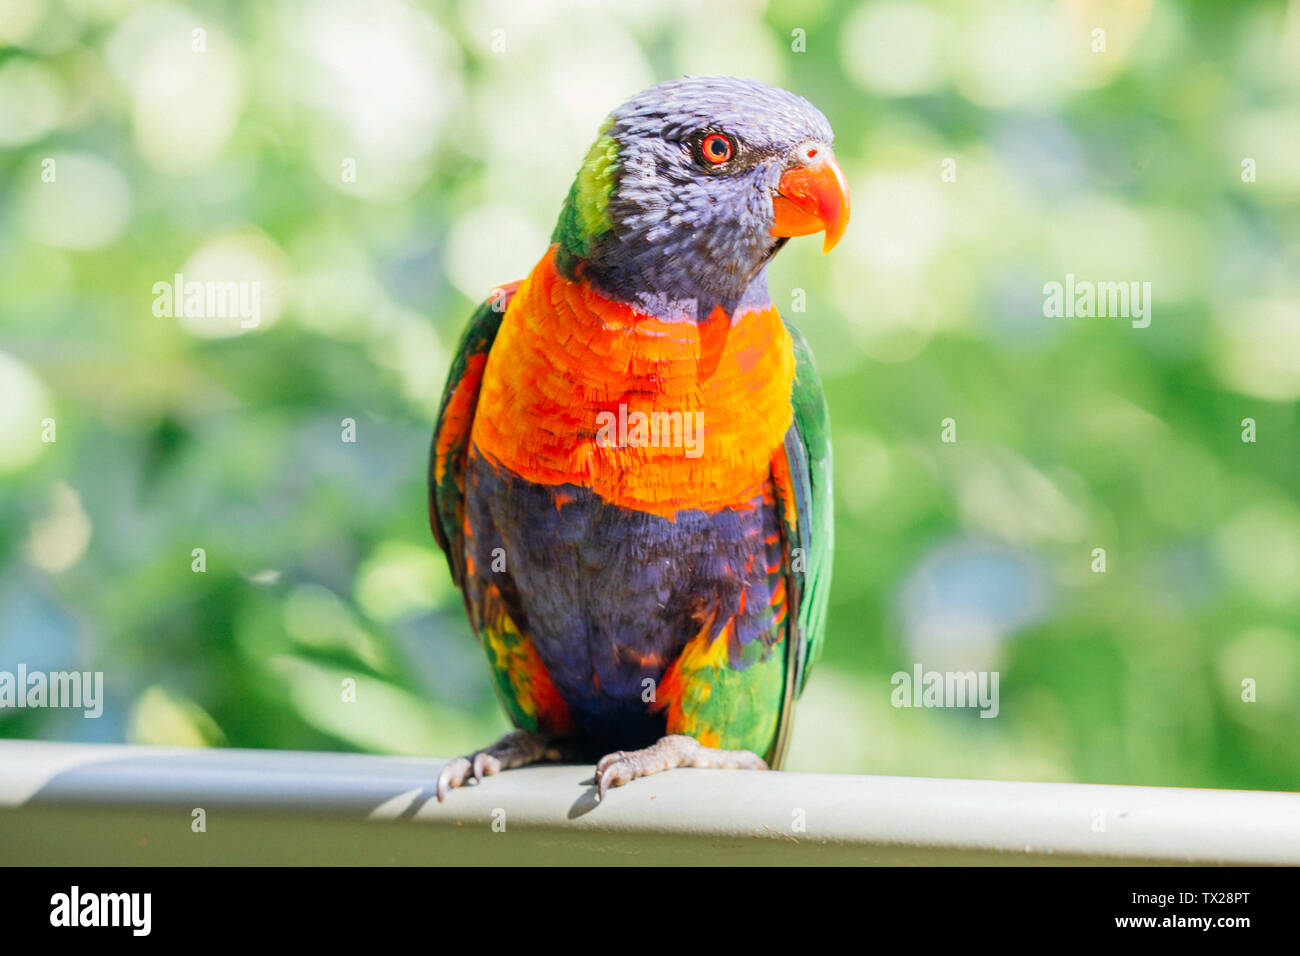 Colourful lorikeet parrot sitting on a balcony in Australia Stock Photo